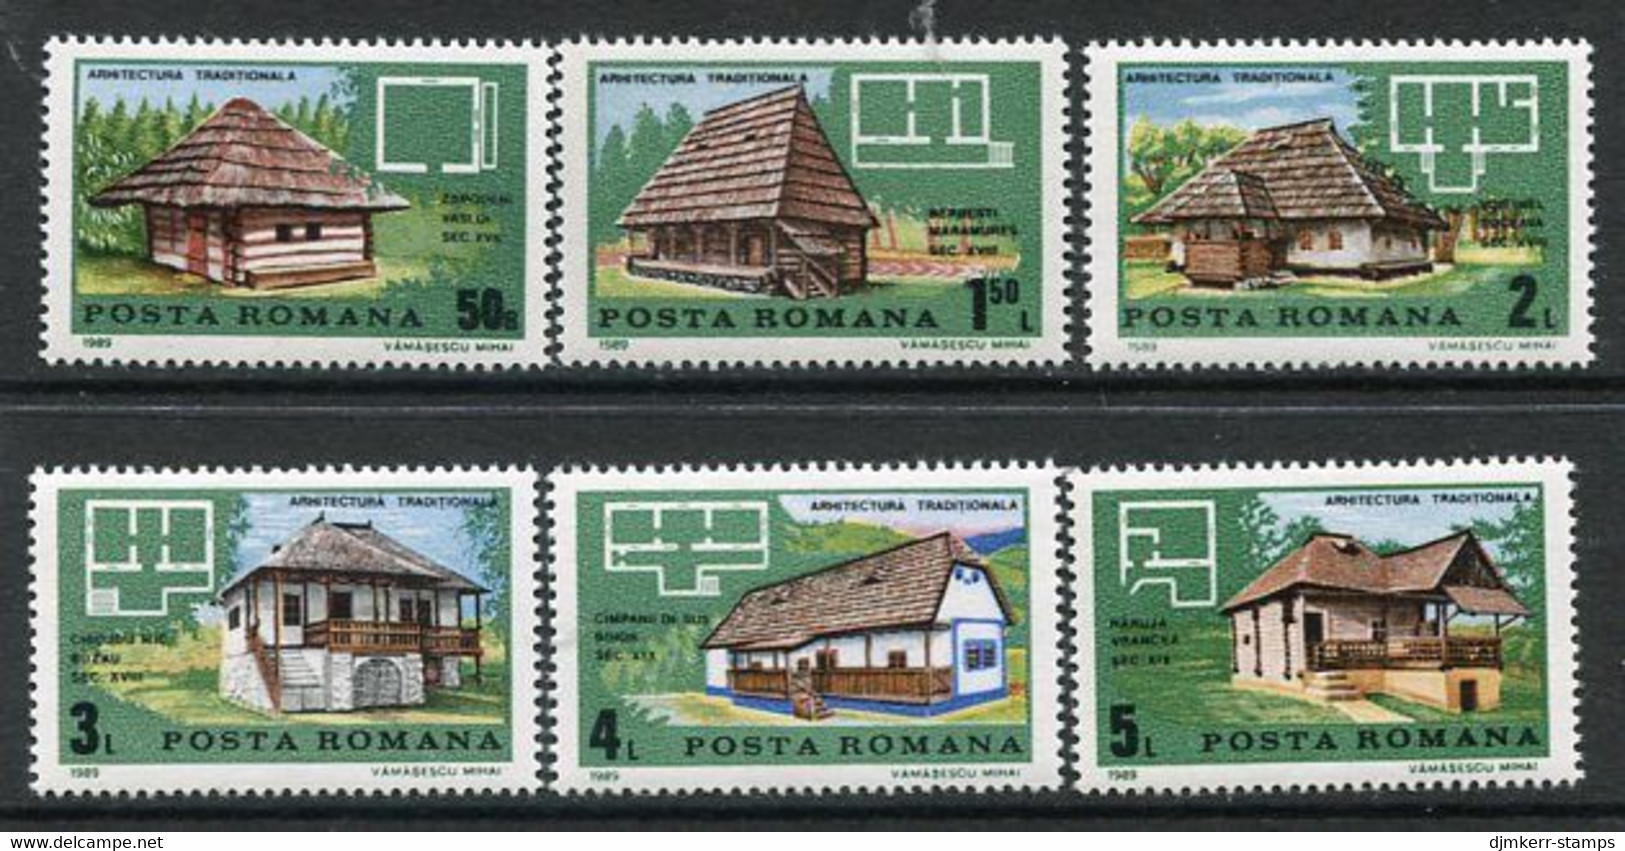 ROMANIA 1989 Traditional Architecture  MNH/**.  Michel 4524-29 - Unused Stamps